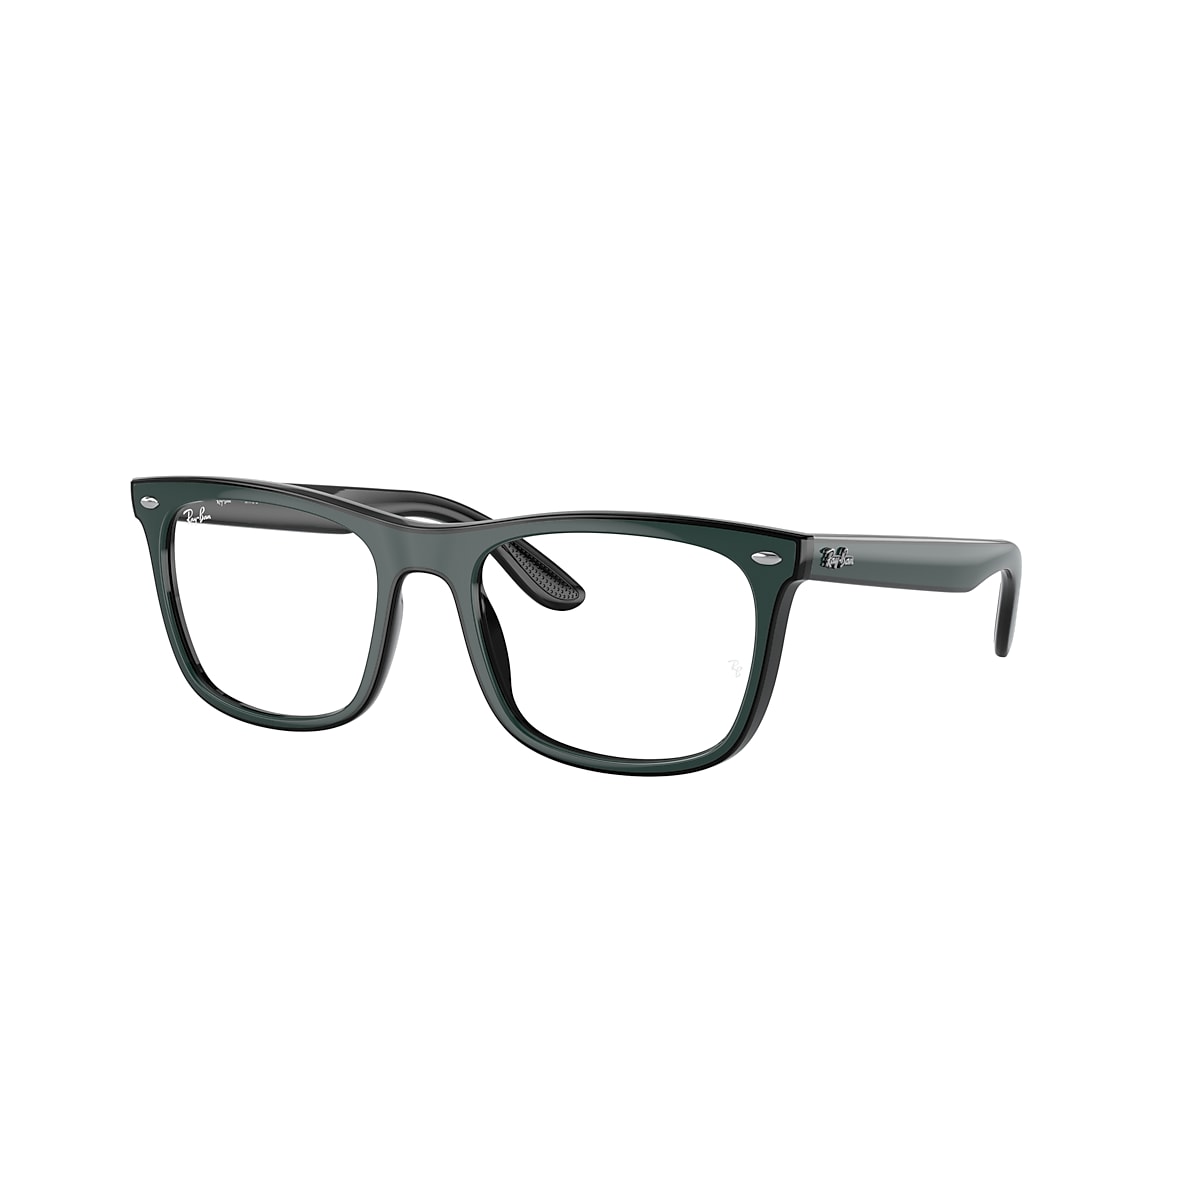 RB7209 OPTICS Eyeglasses with Green Black Frame - Ray-Ban